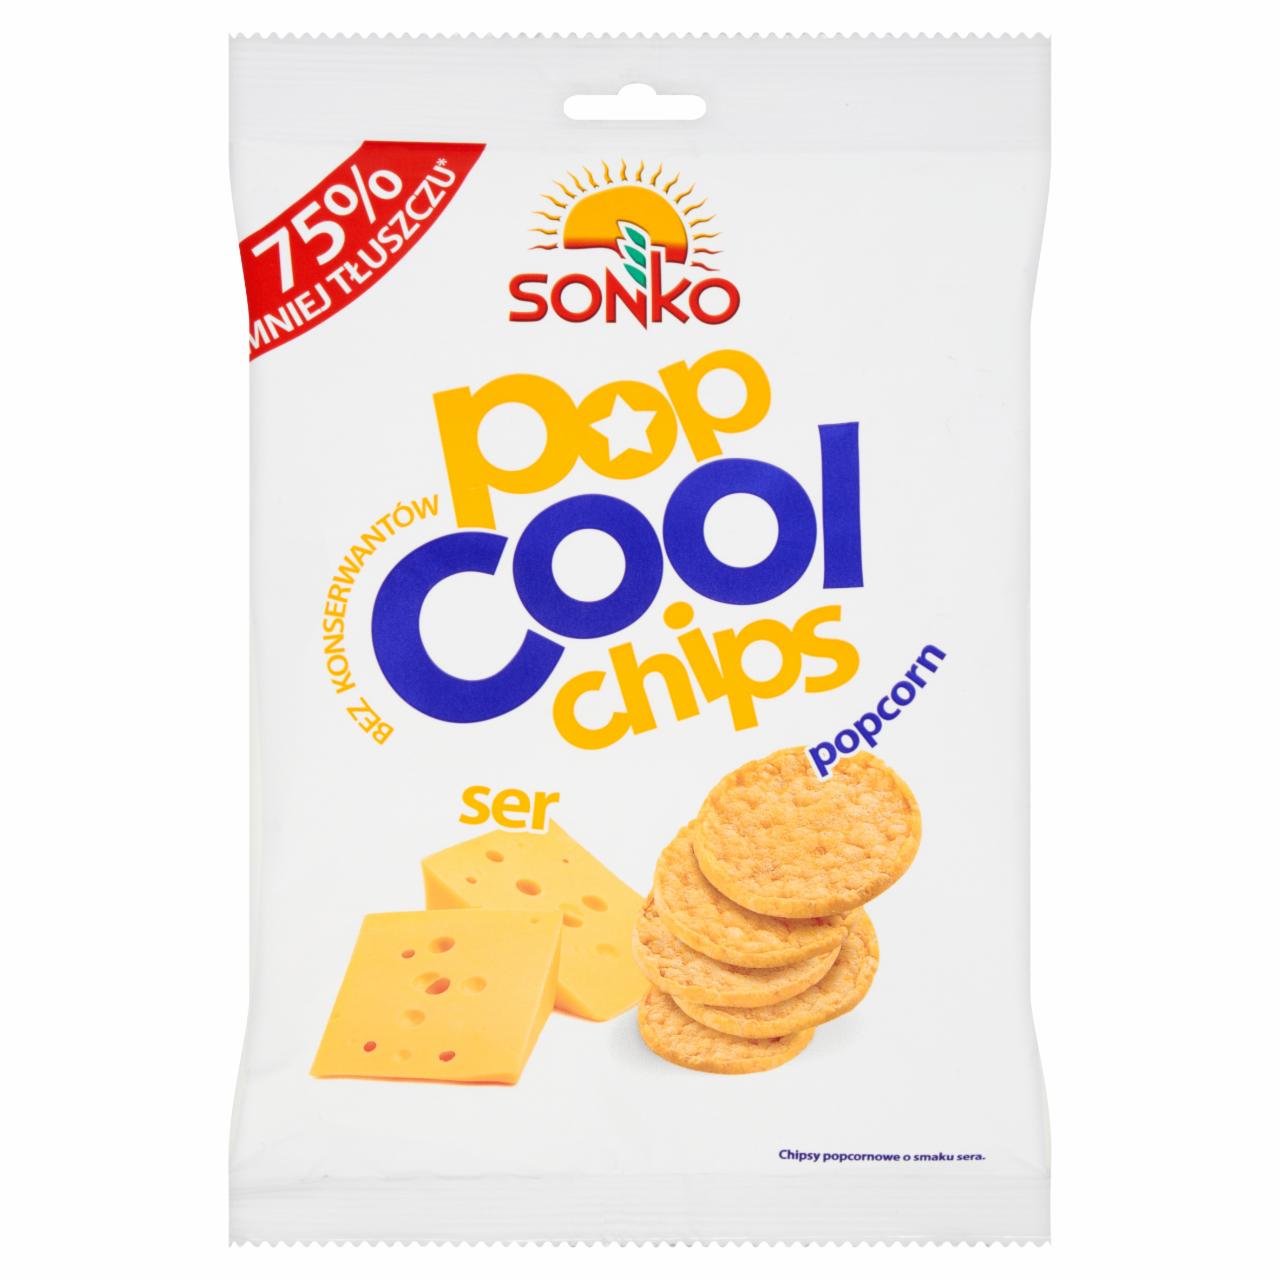 Zdjęcia - Sonko Popcool Chips Chipsy popcornowe o smaku sera 60 g